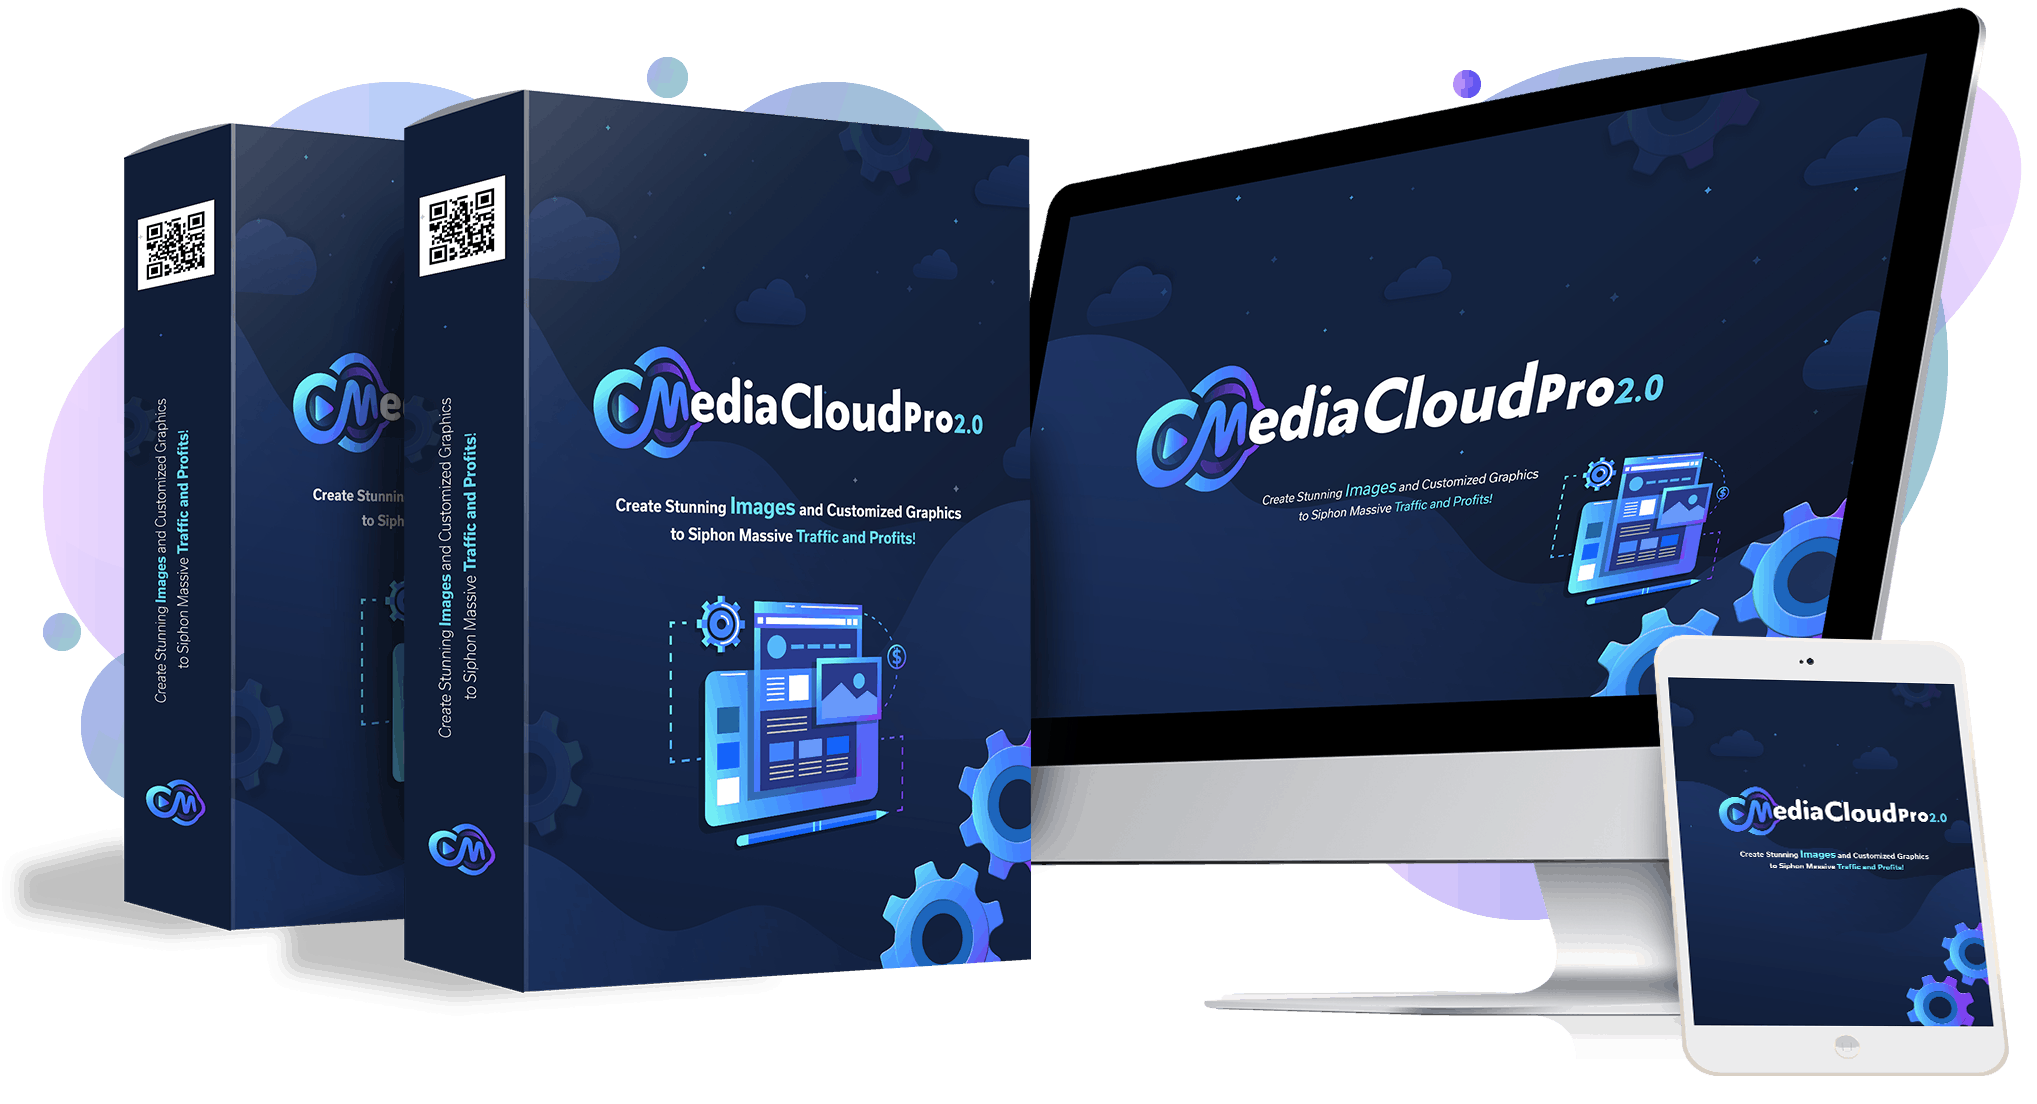 MediaCloudPro 2.0